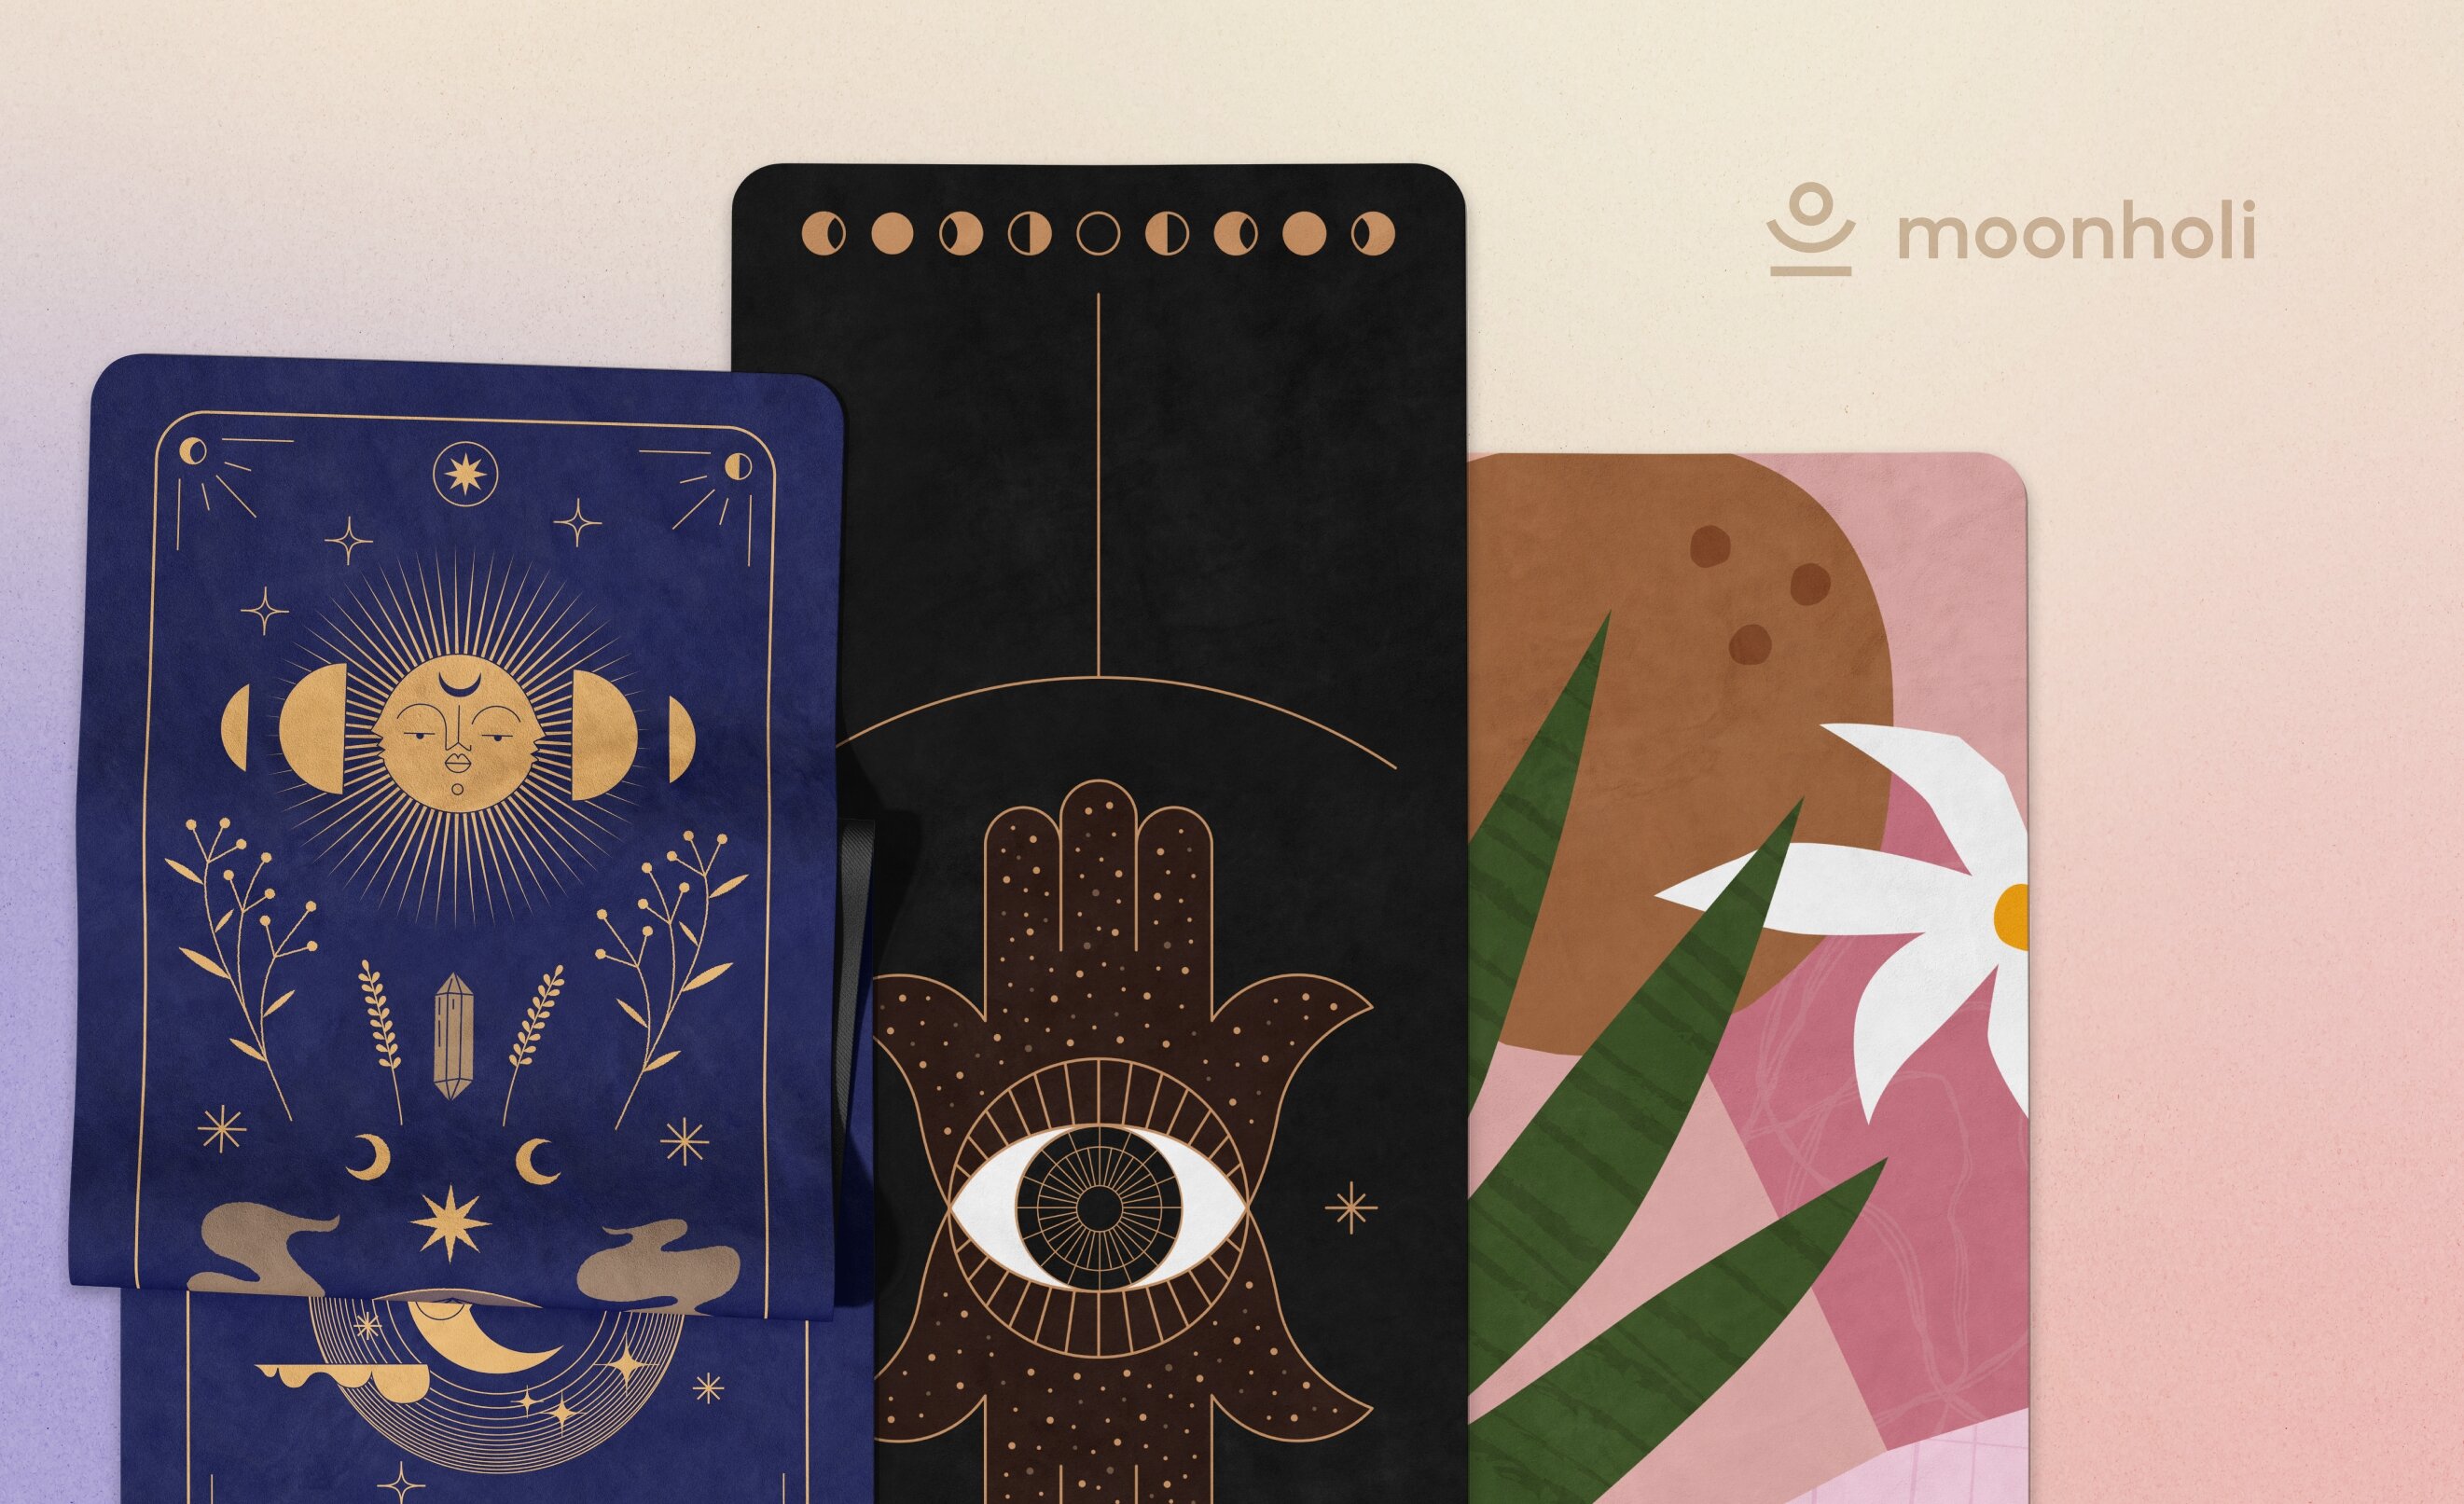 Portfolio cover - selected mats and Moonholi logo